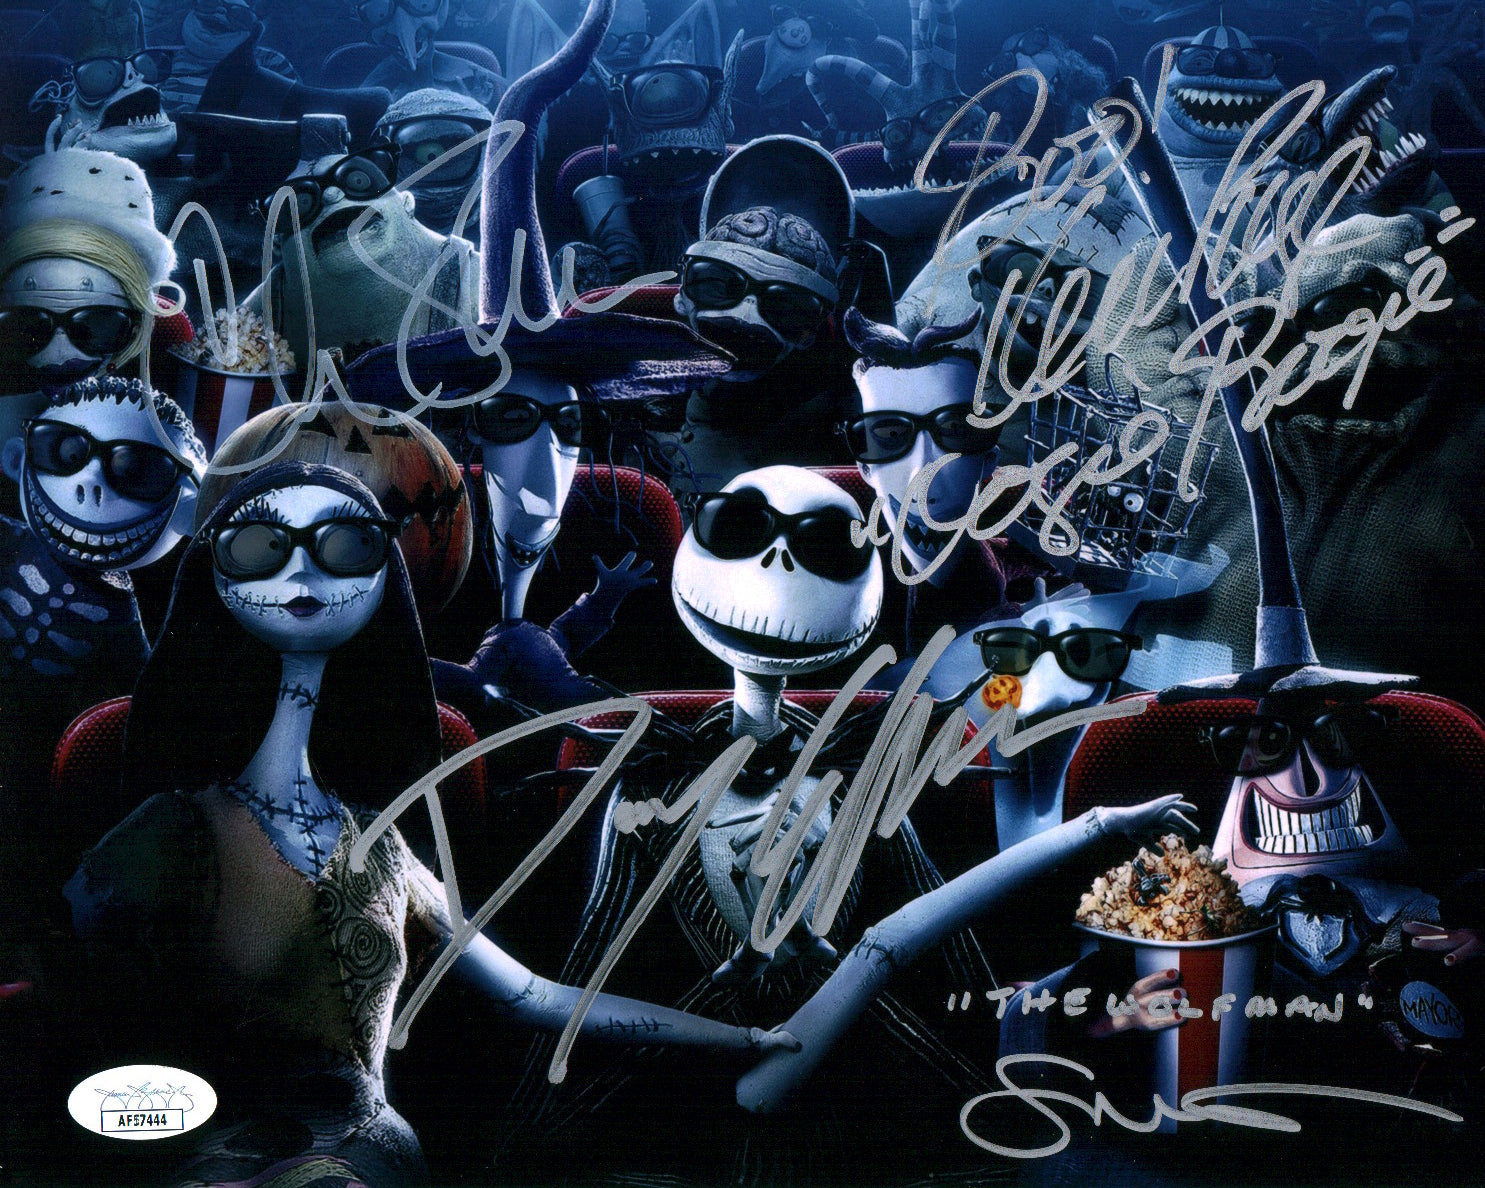 Disney Nightmare Before Christmas 8x10 Photo Signed Elfman Page Sarandon Walters JSA COA Certified Autograph